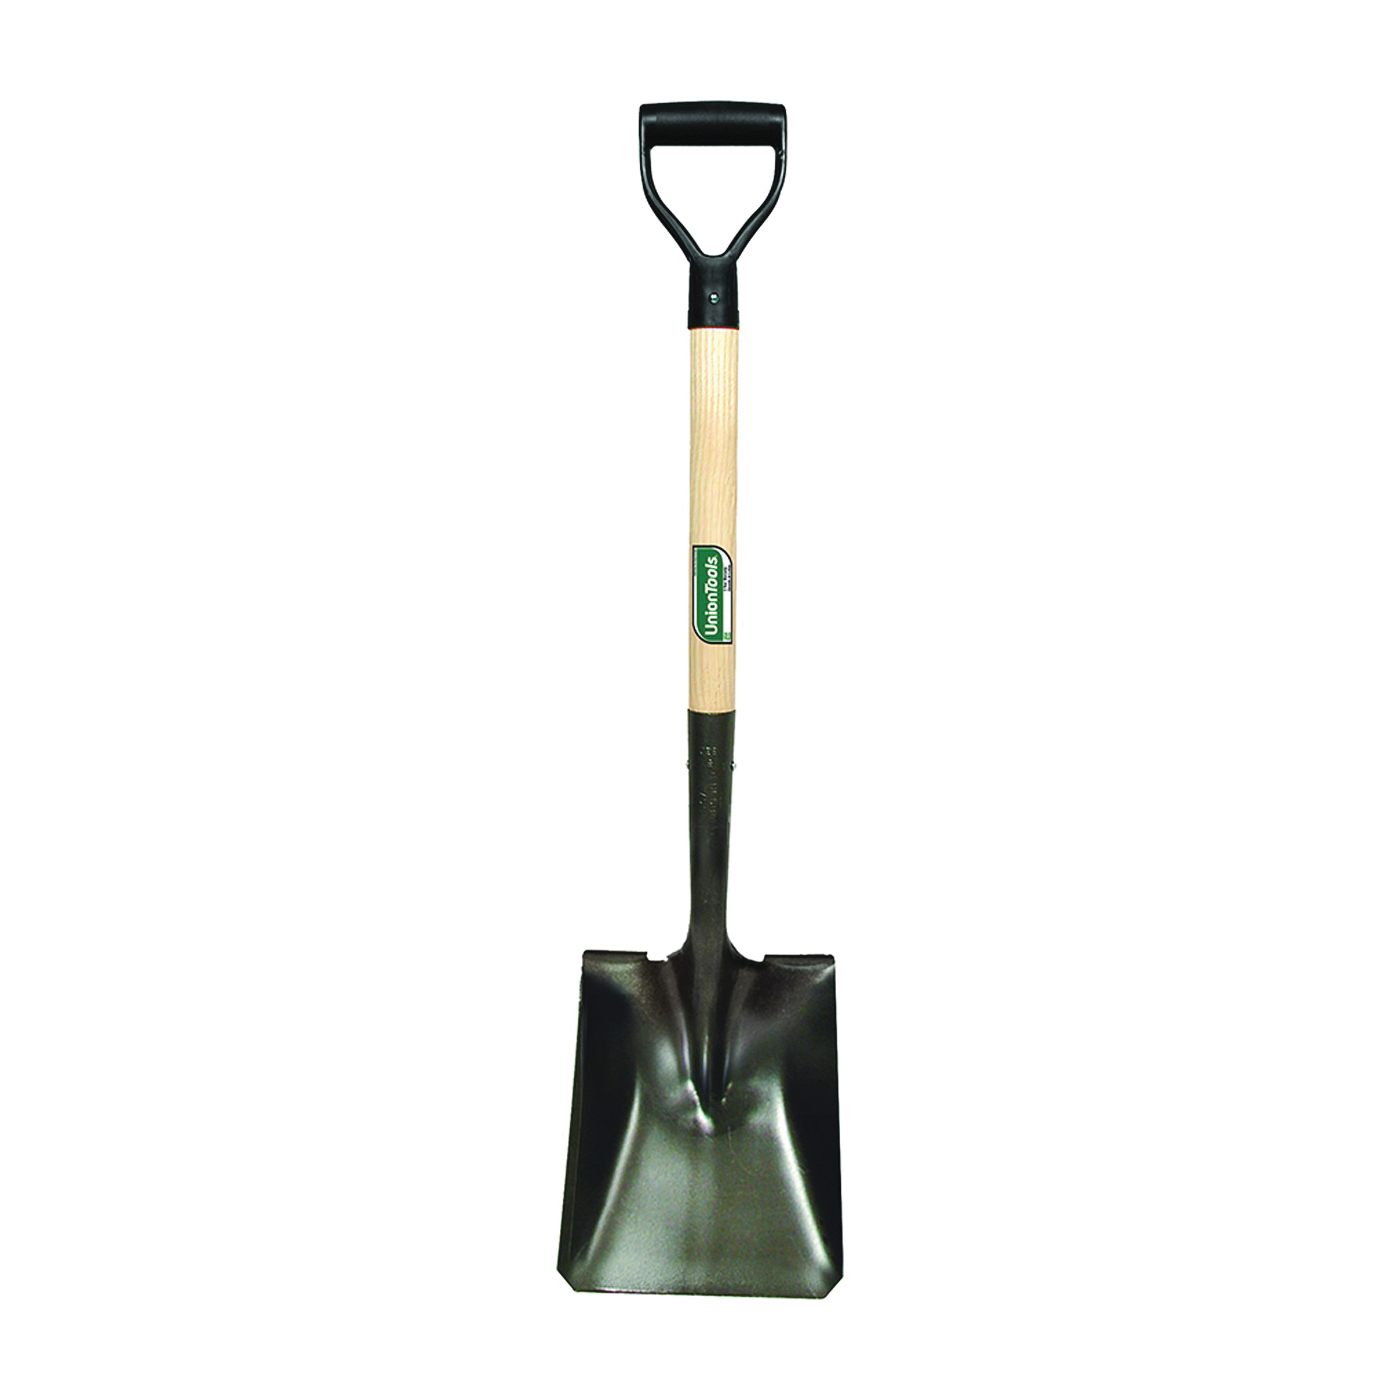 42106 Transfer Shovel, 9-1/4 in W Blade, Carbon Steel Blade, Hardwood Handle, D-Shaped Handle, 28 in L Handle